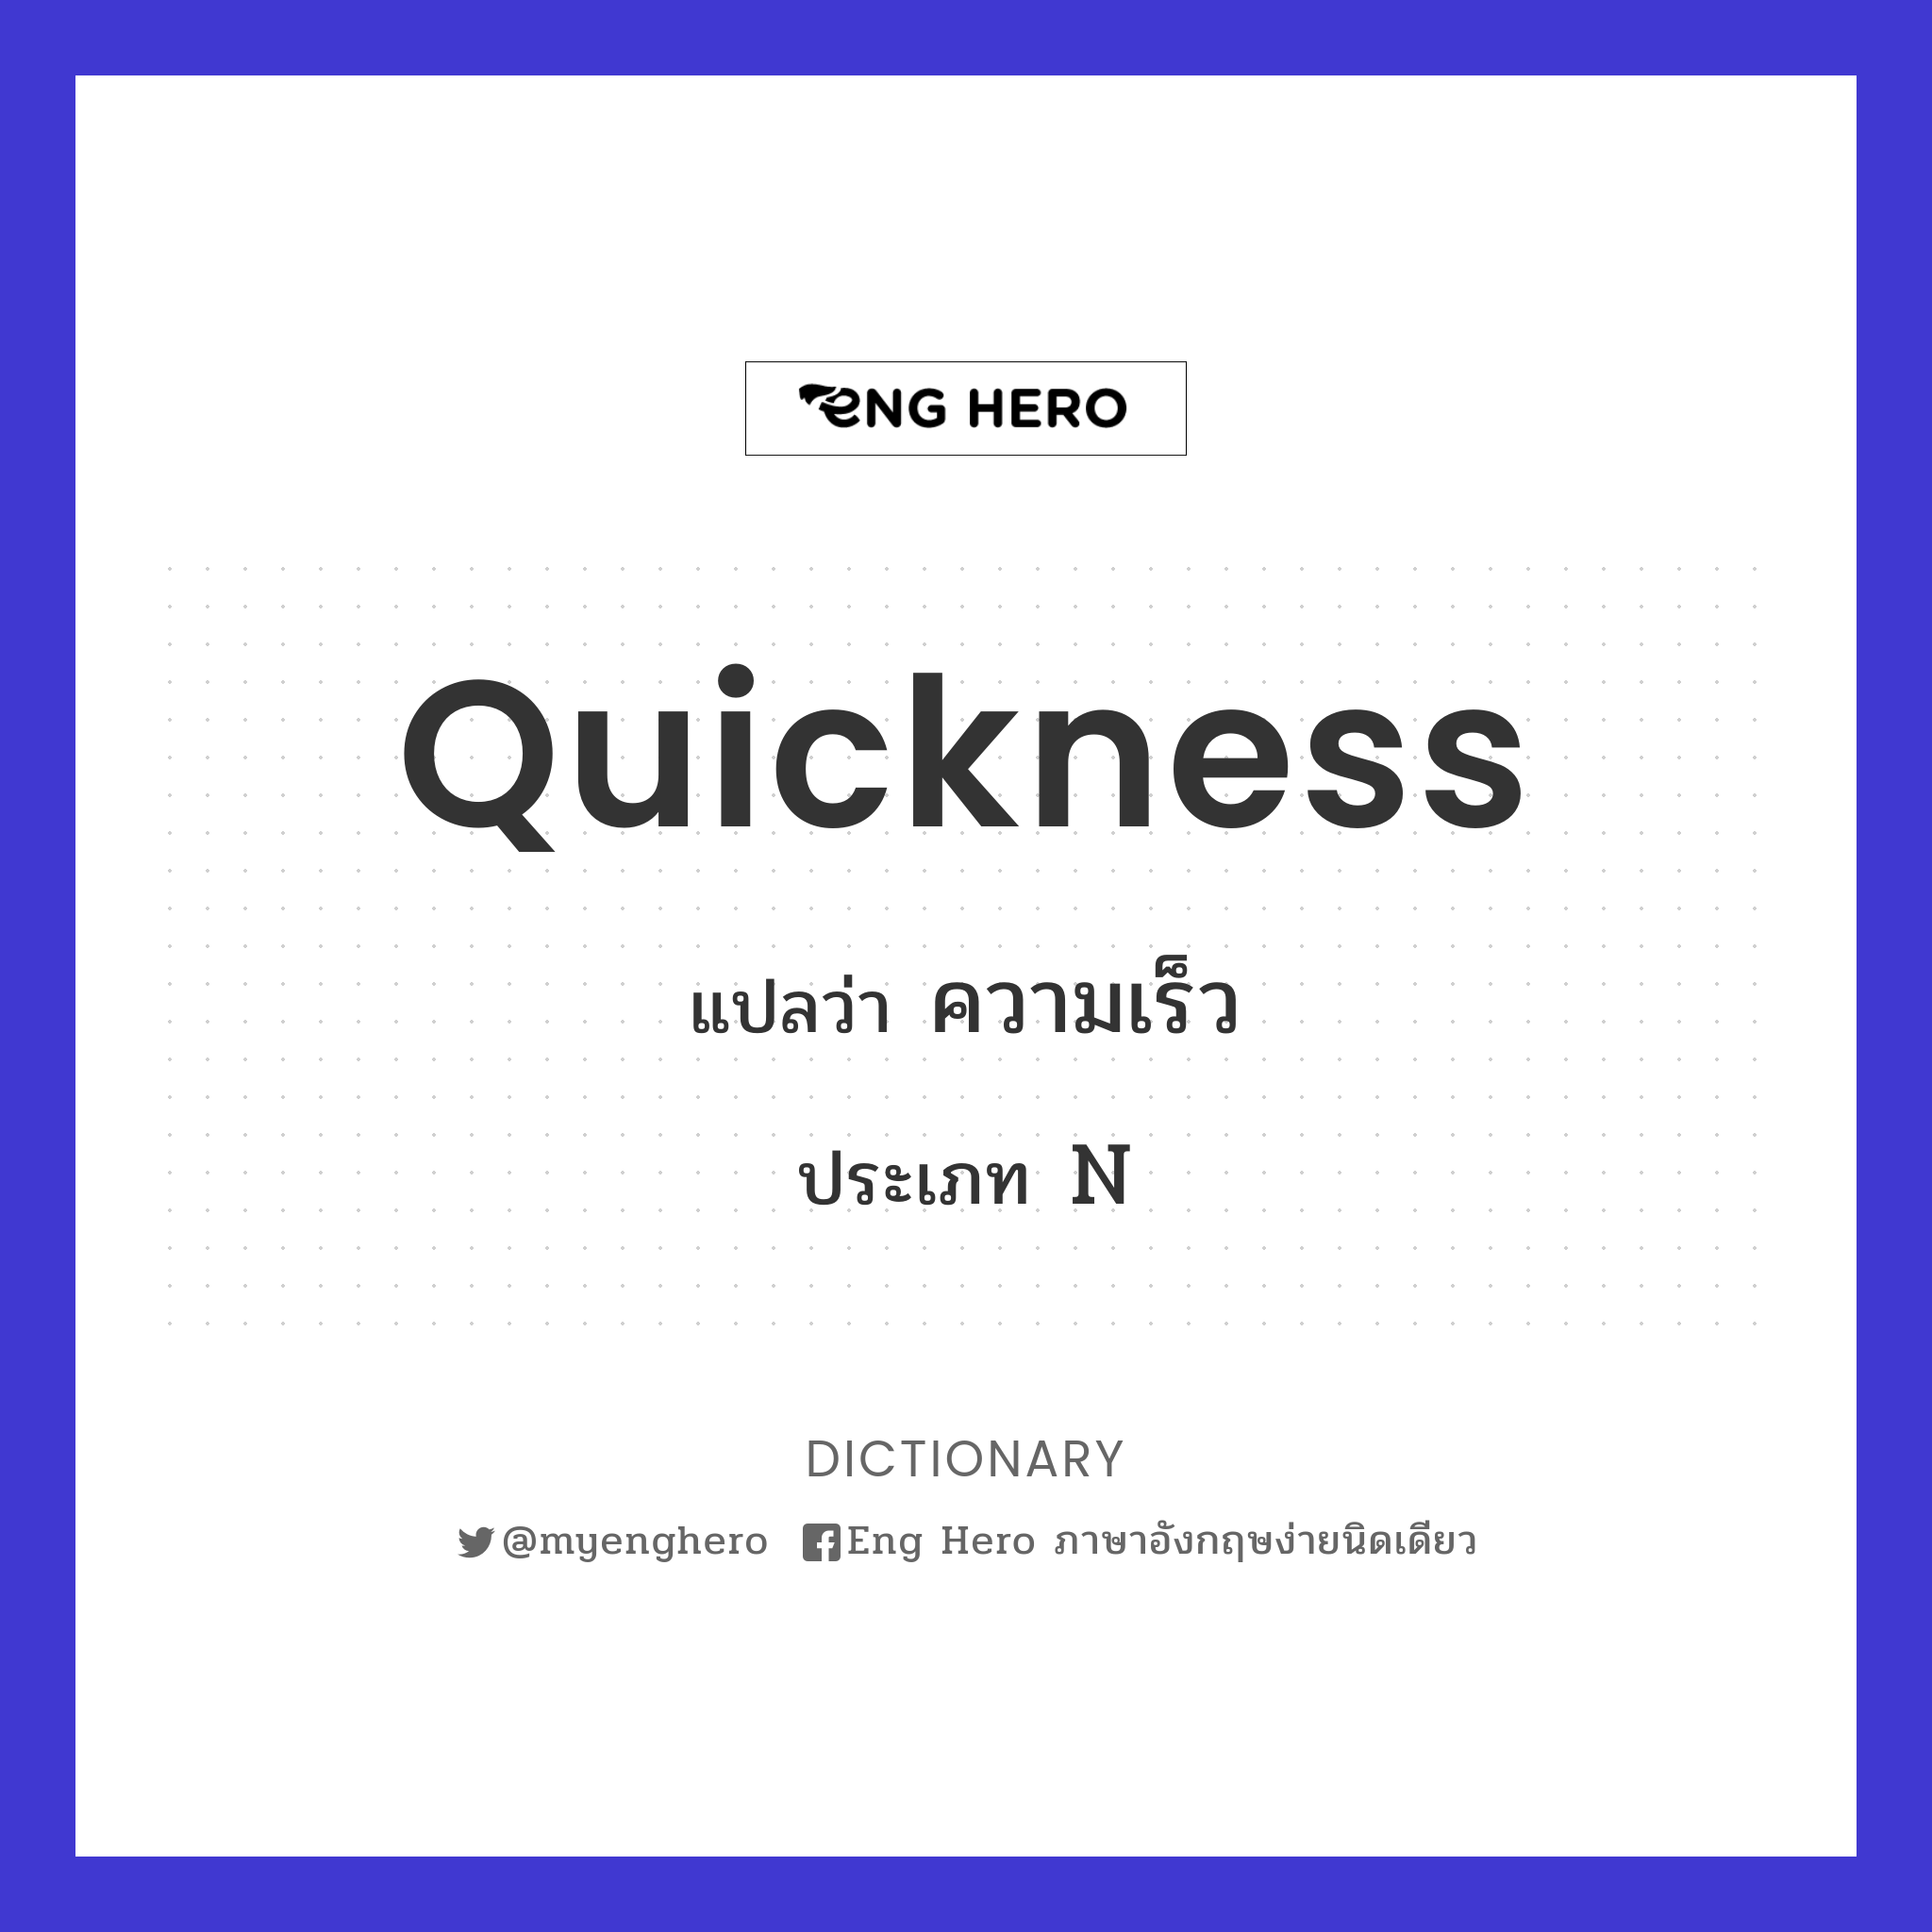 quickness